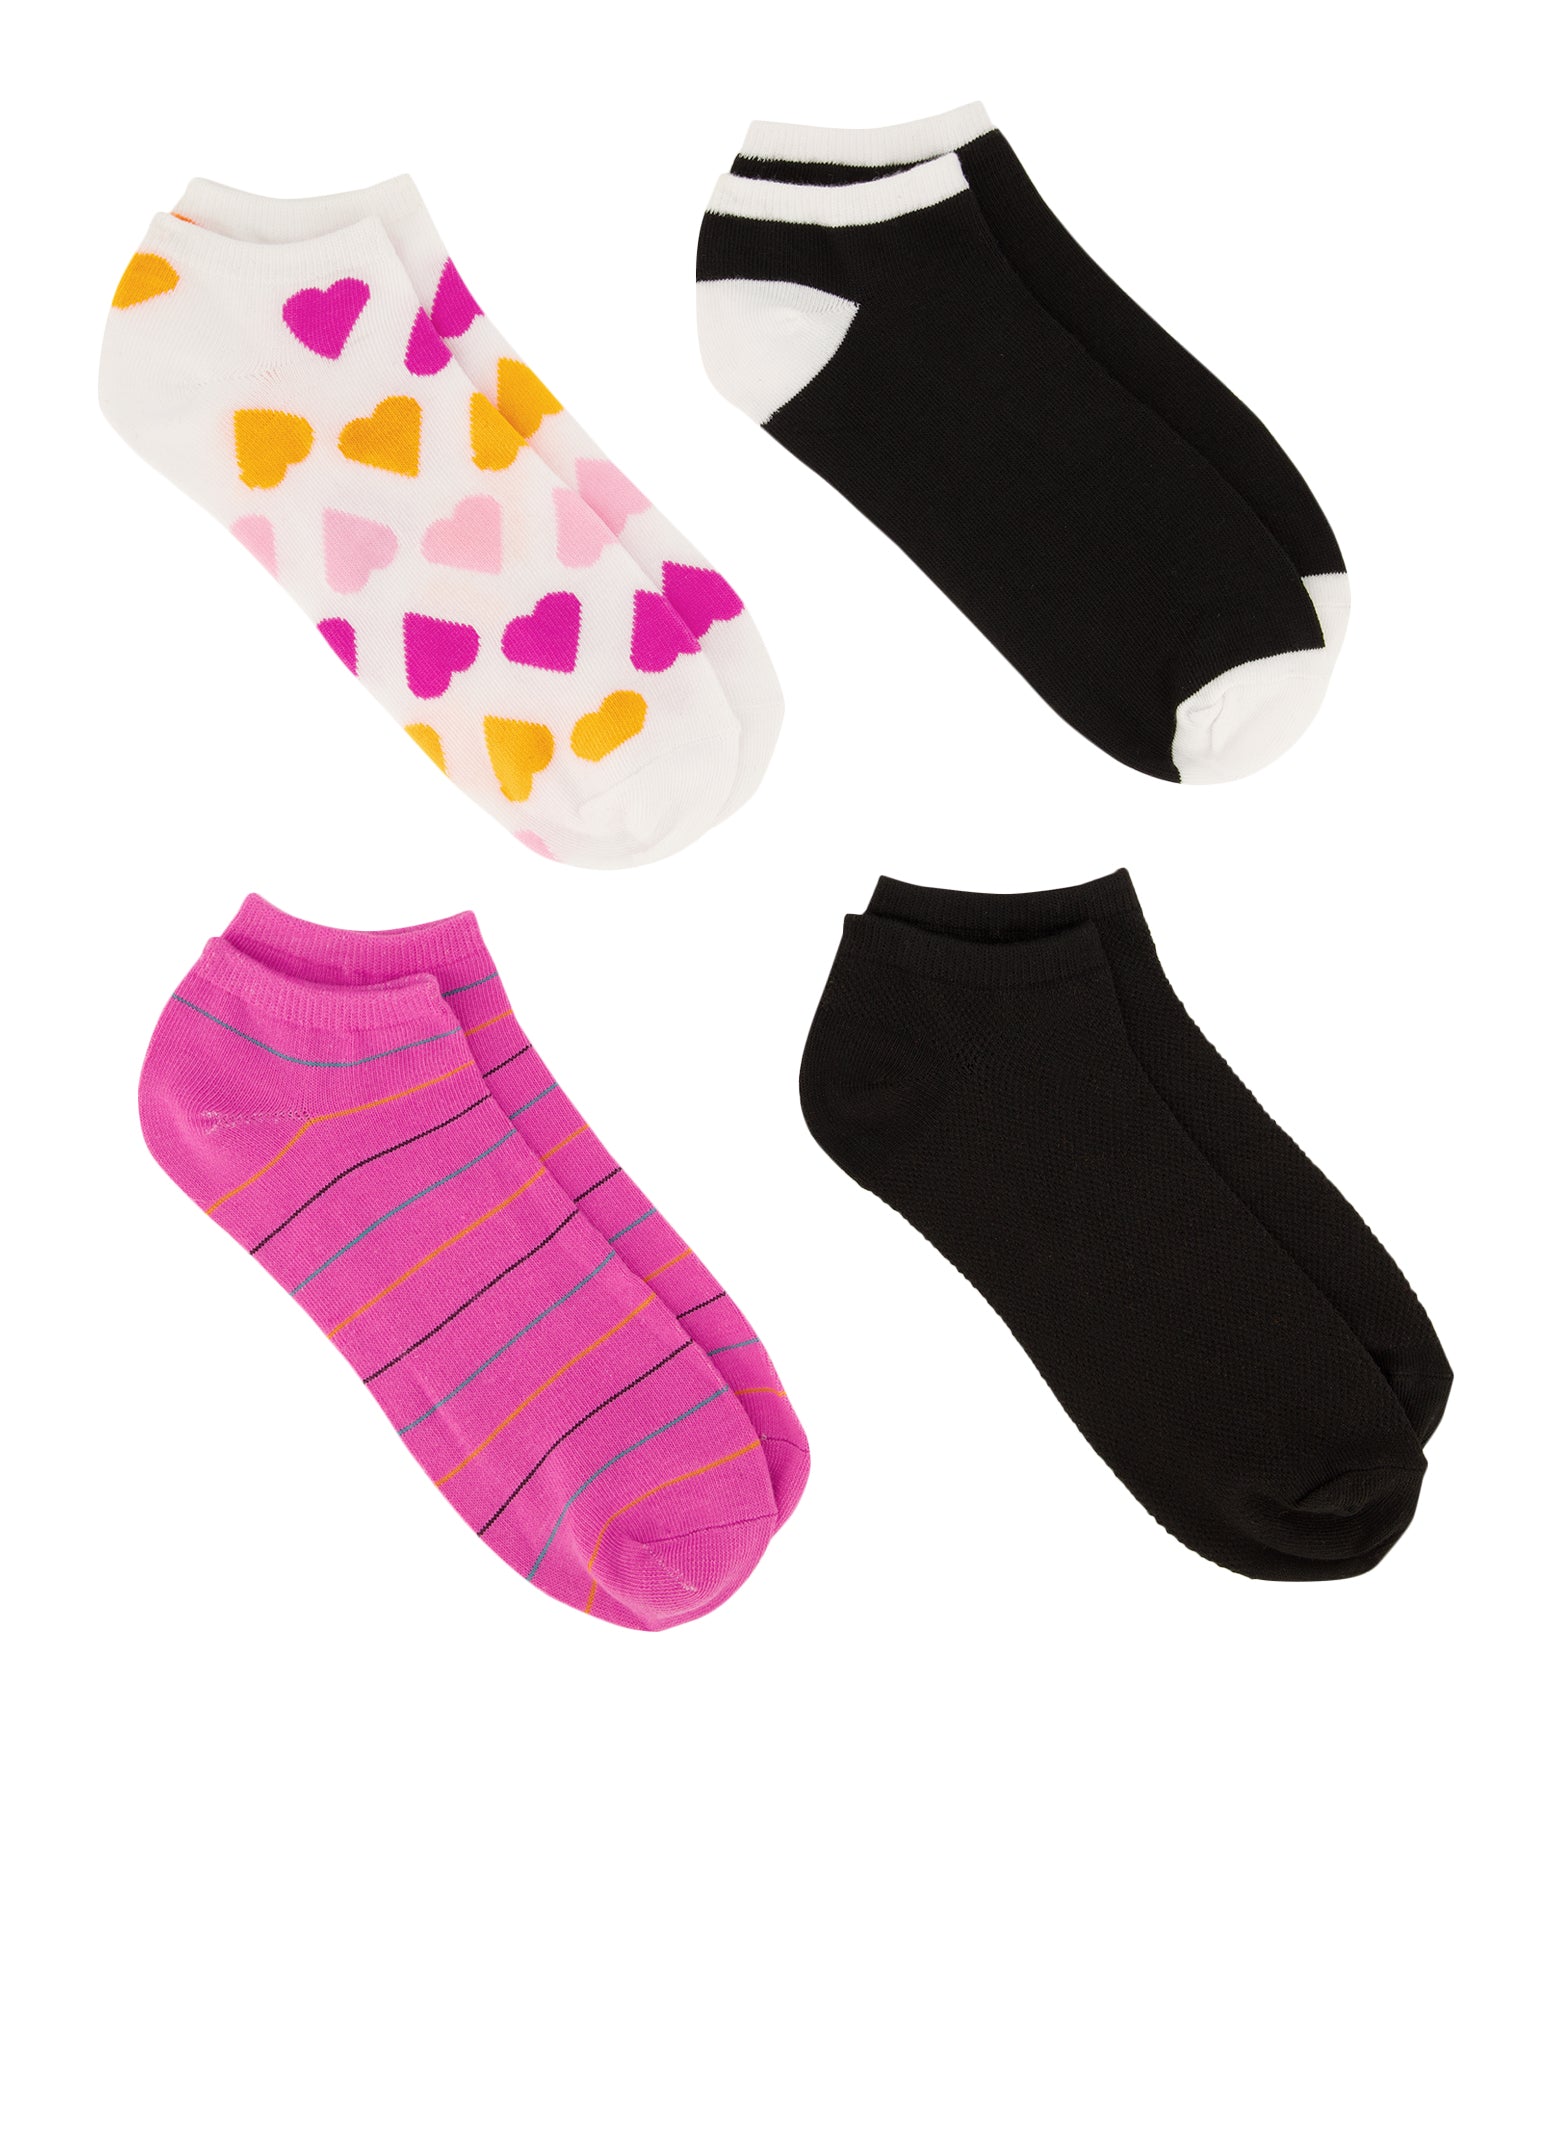 4 Pack Assorted Patterned Ankle Socks